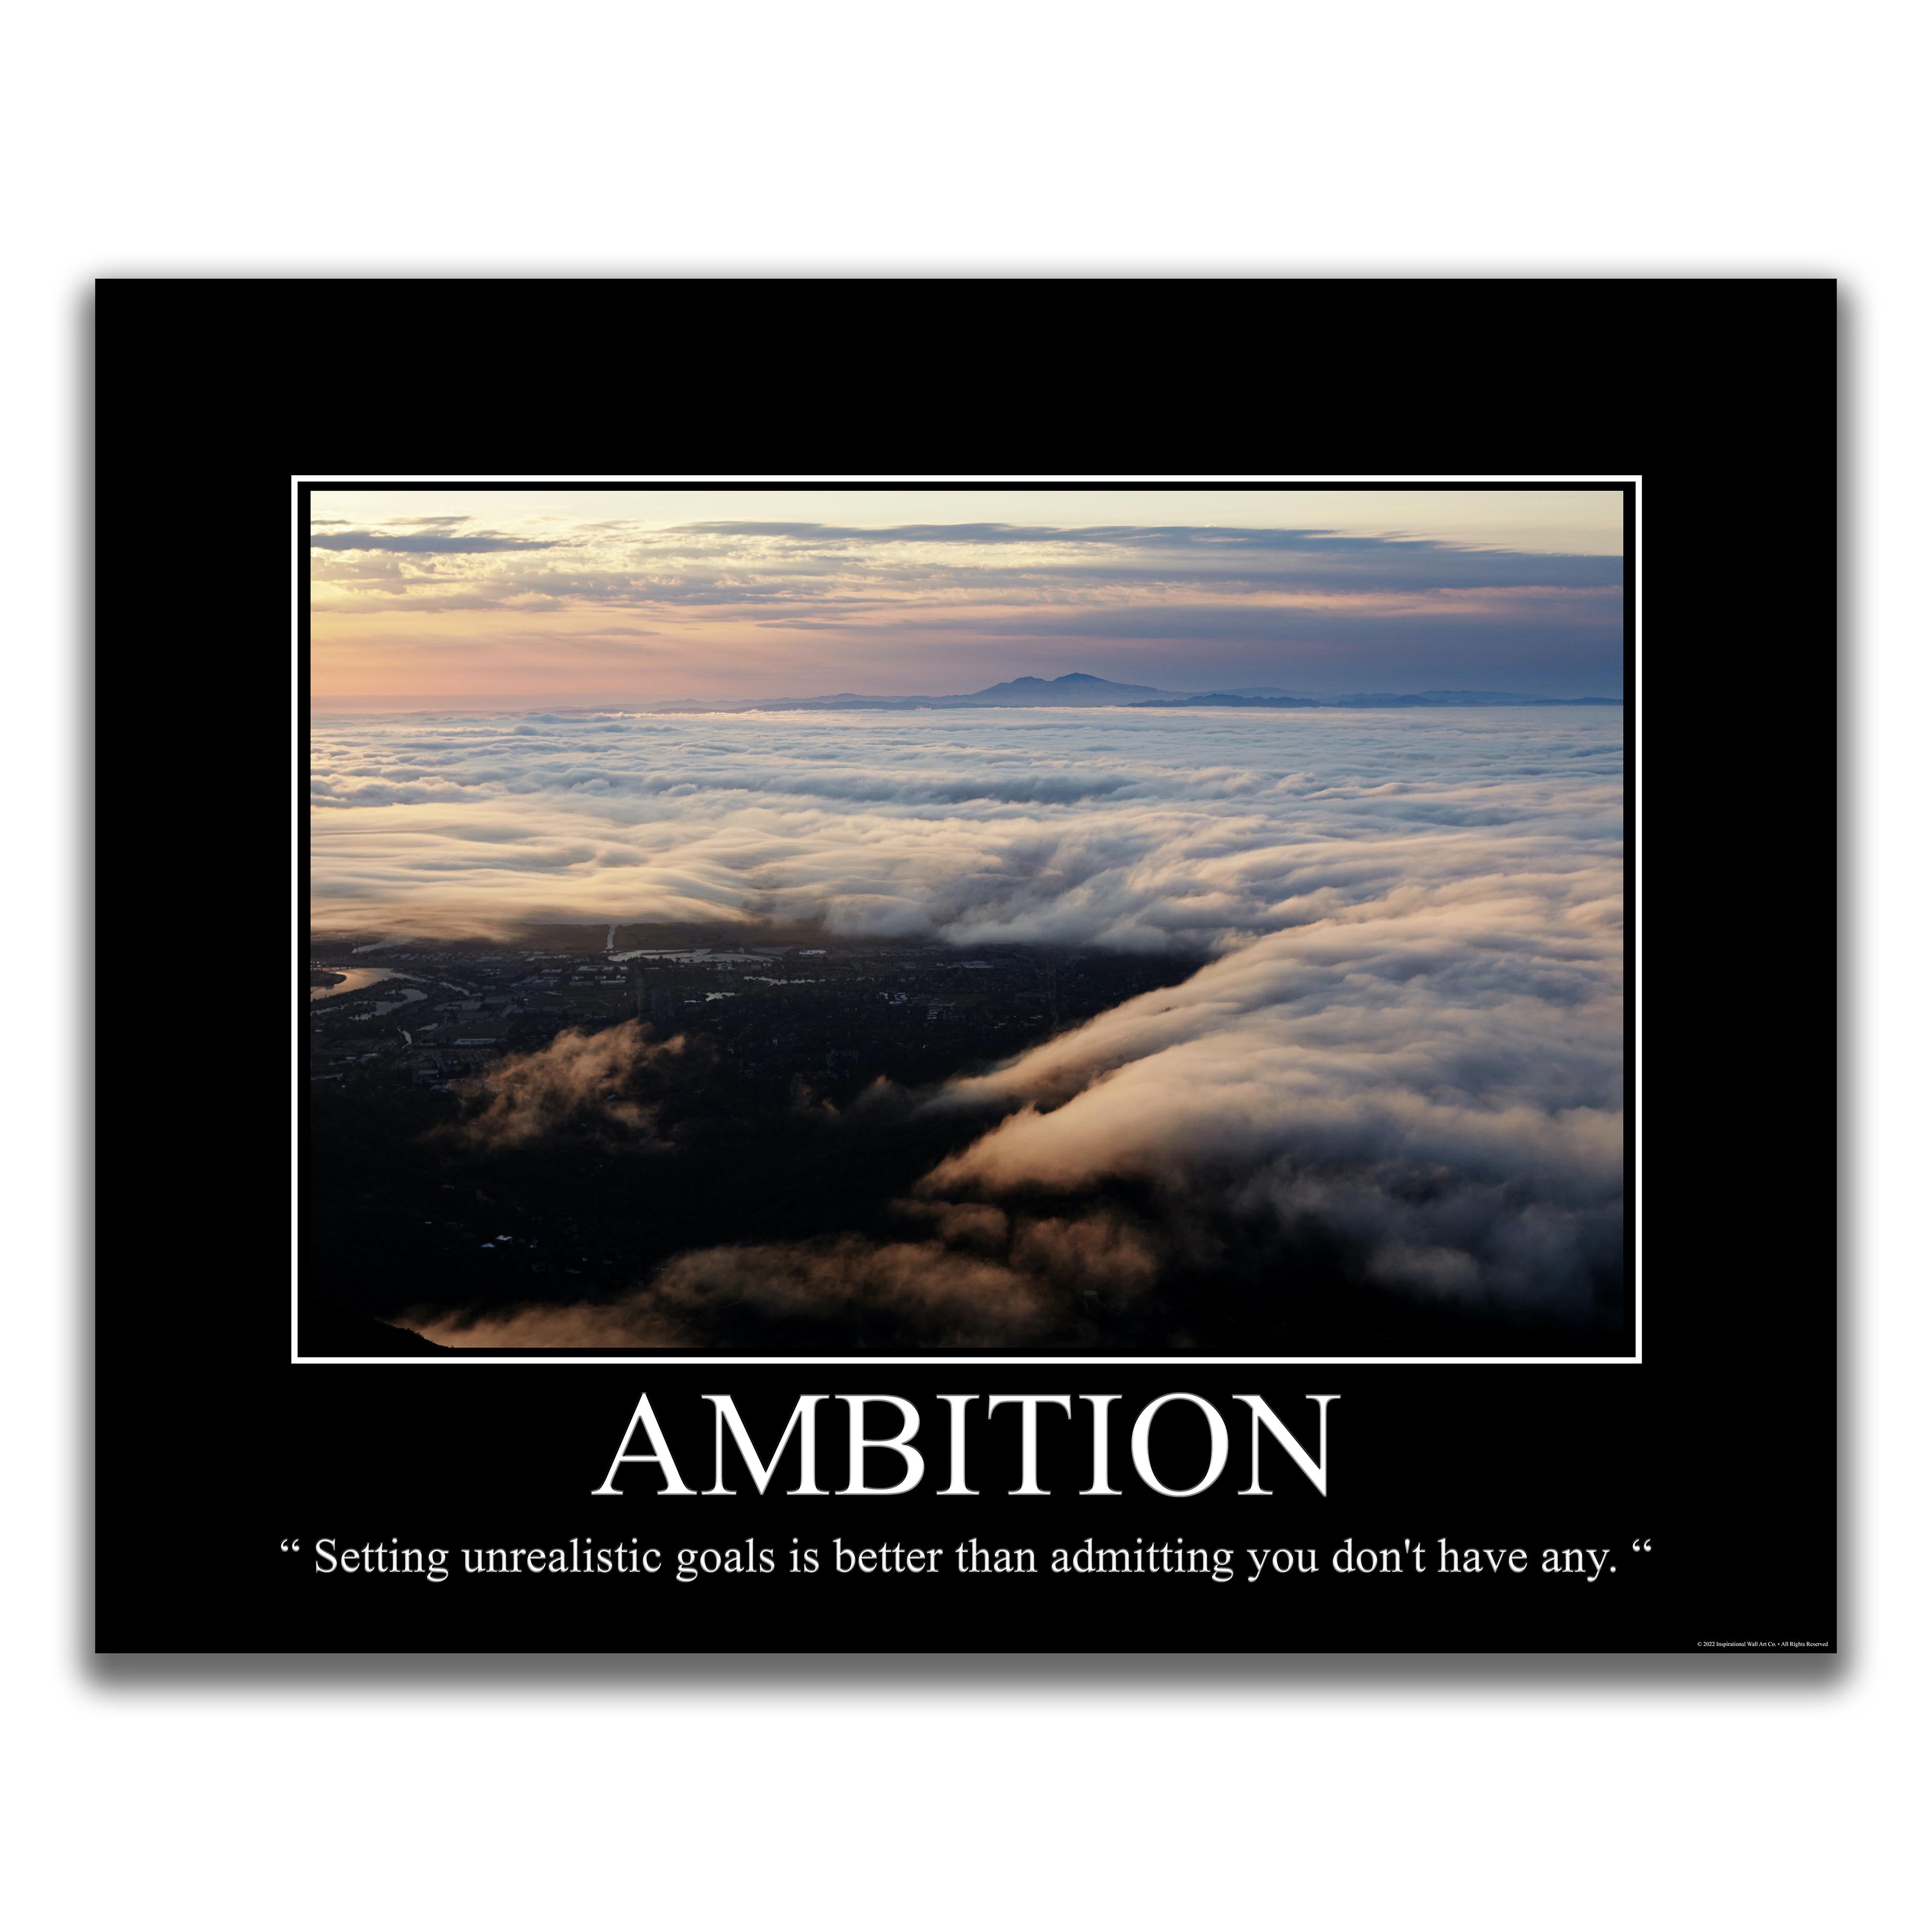 Ambition - Demotivational Poster